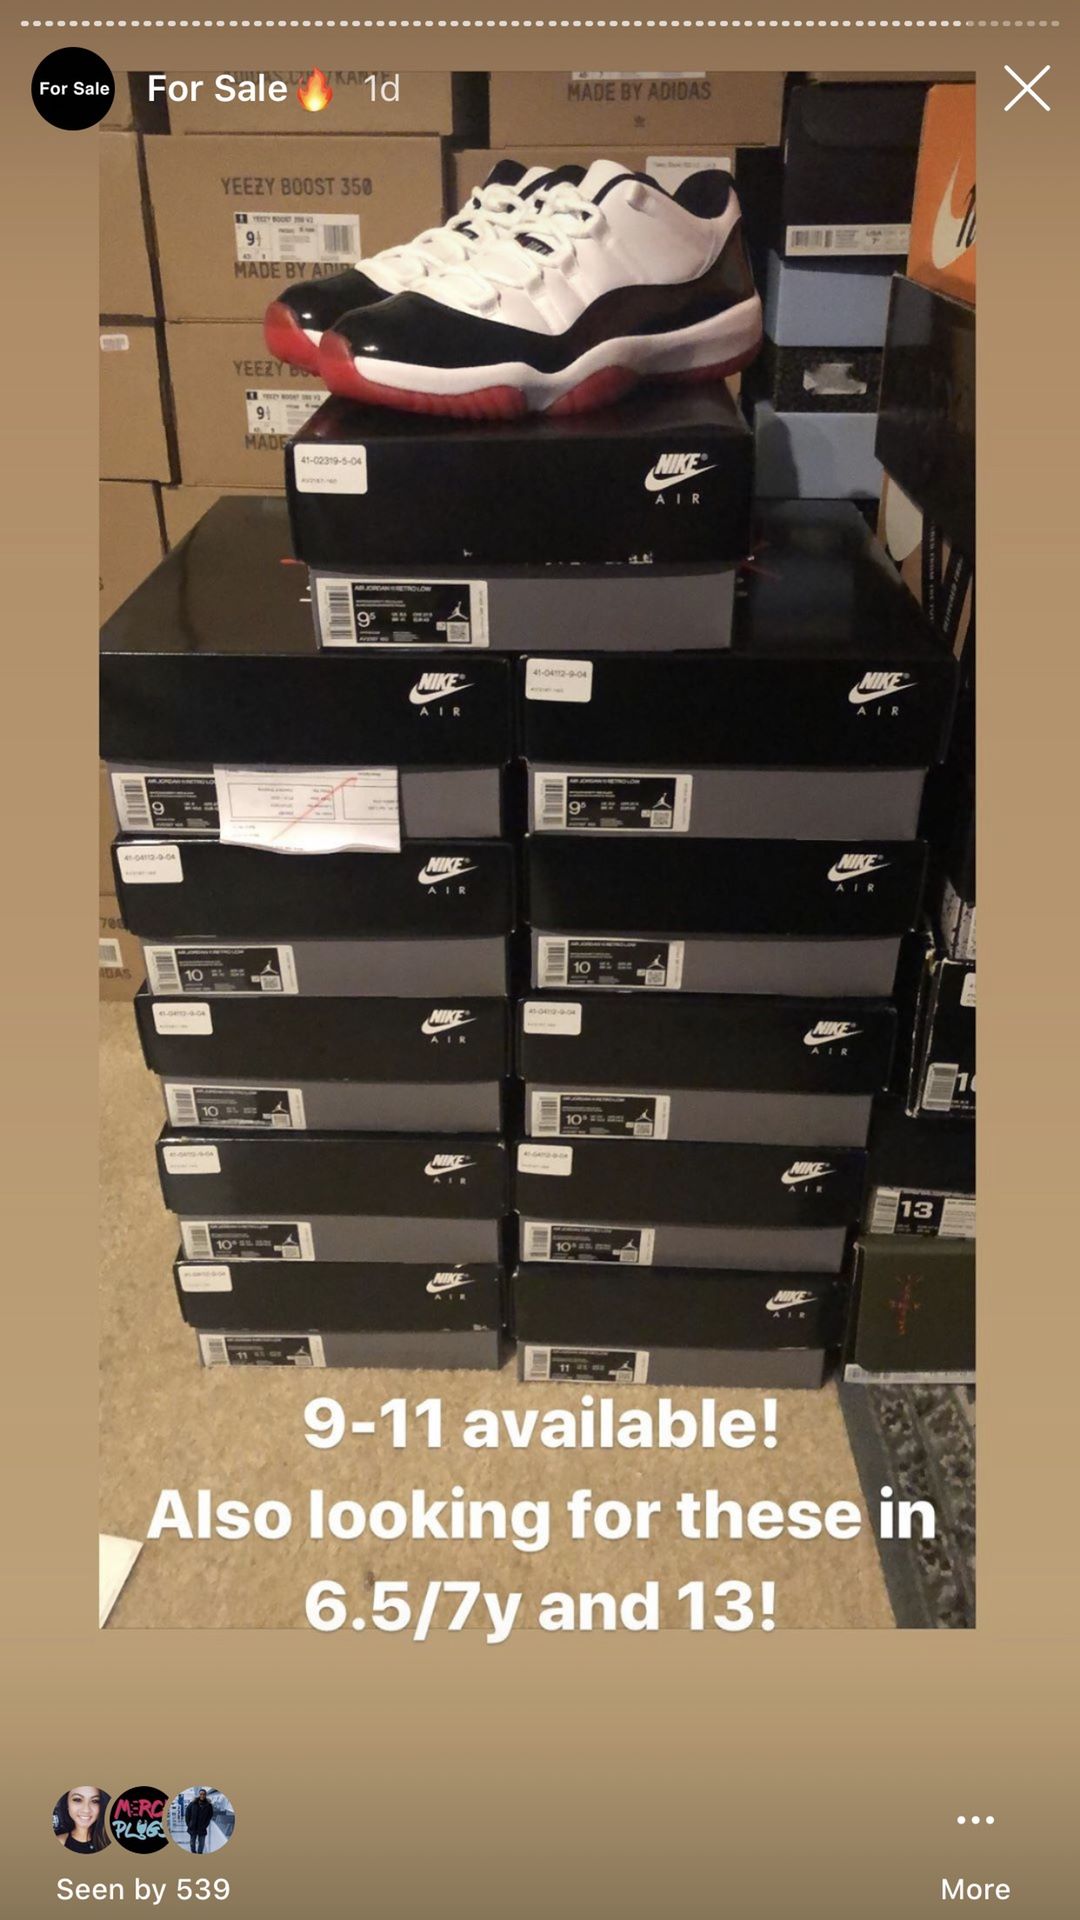 Nike air Jordan concord bred 11 size 9 9.5 10 10.5 11